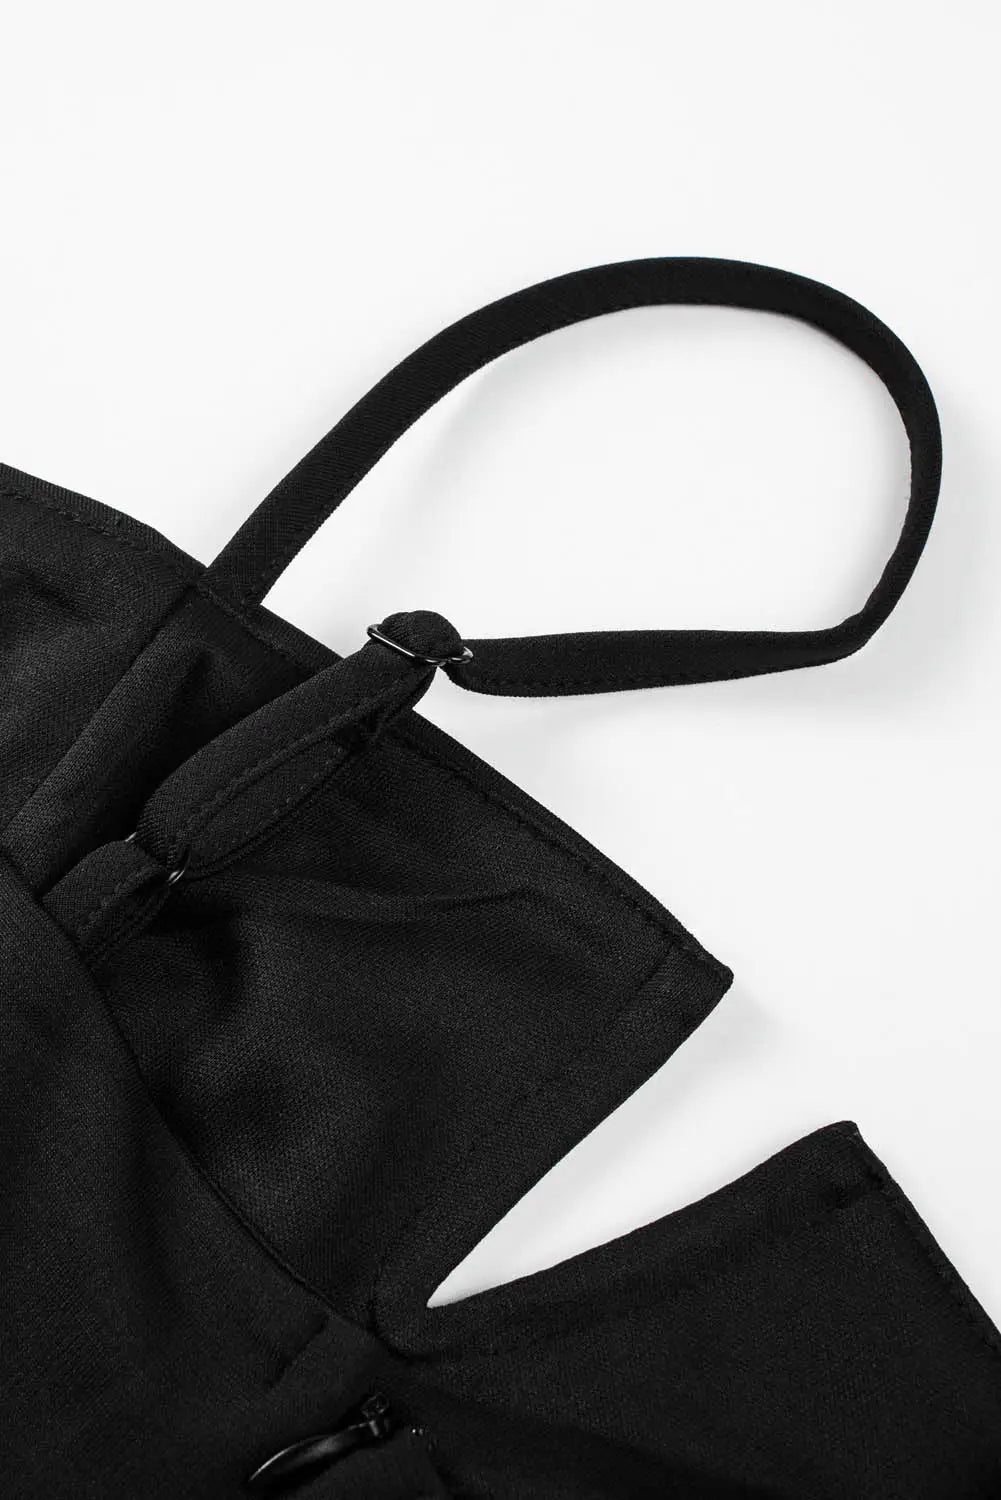 Black spaghetti straps slit leg jumpsuit with pockets - jumpsuits & rompers